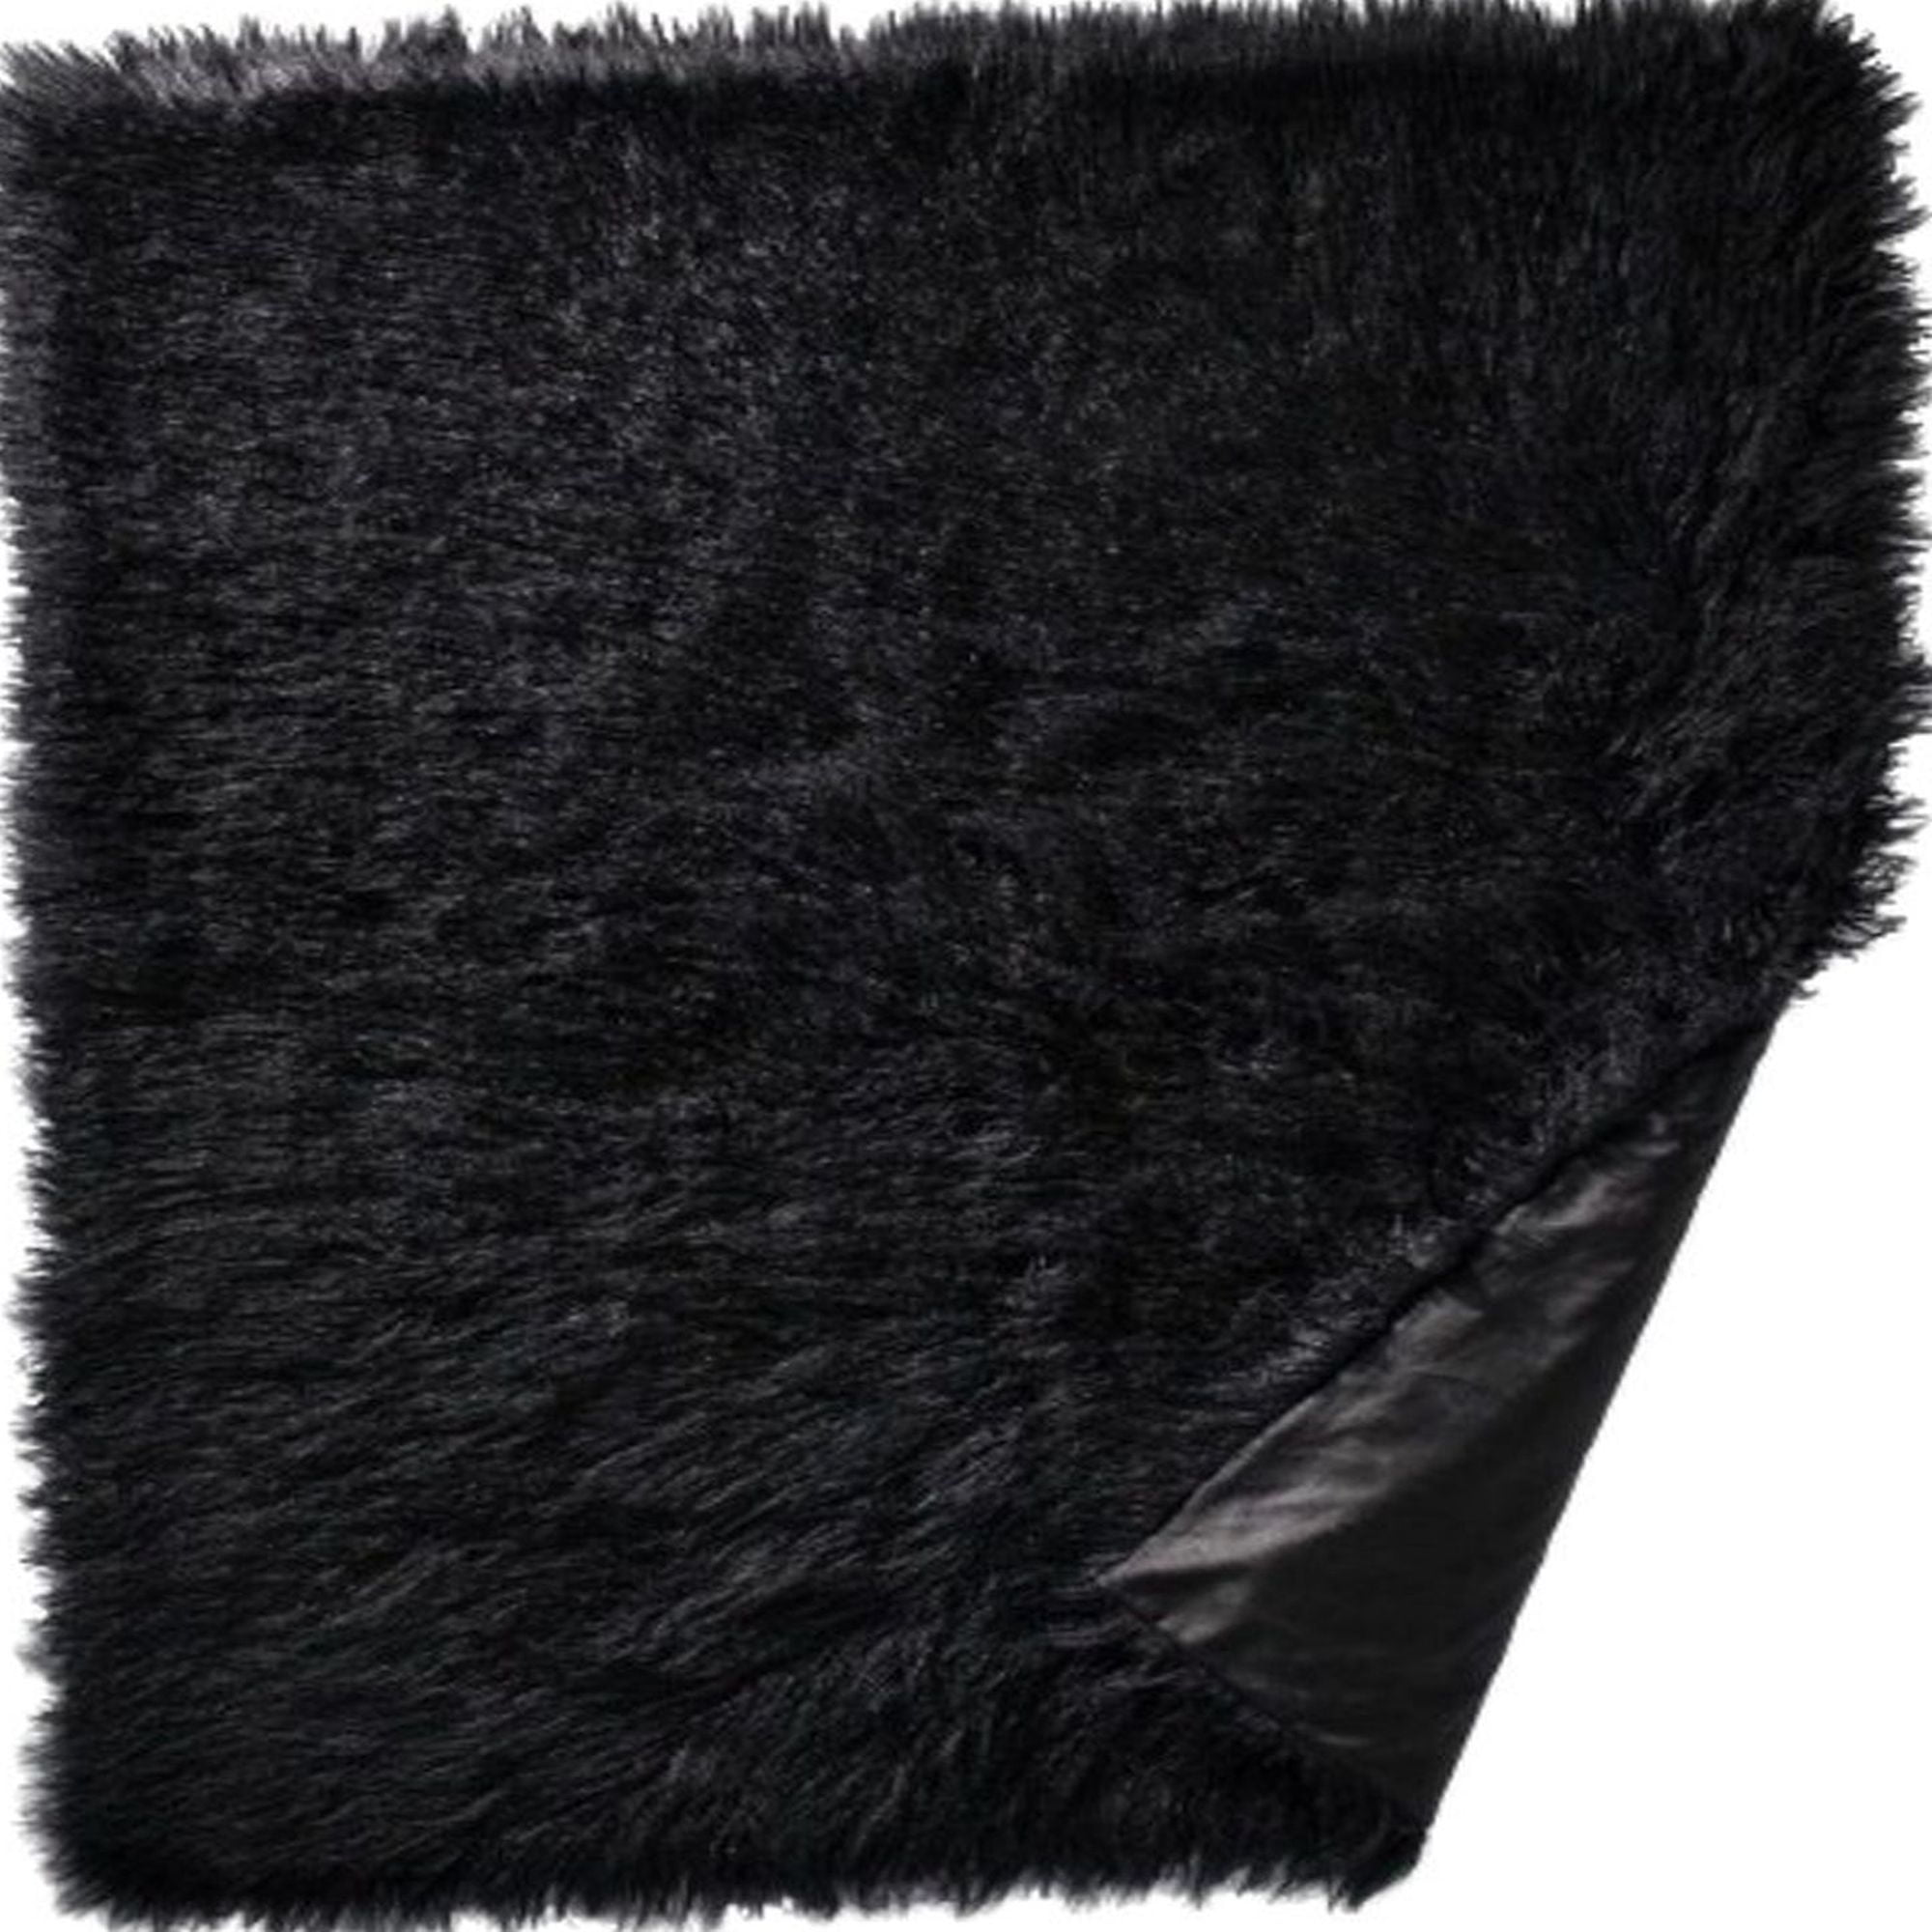 Project 62 Plush Soft Black Mongolian Fur Luxury Throw Blanket 50 In By 60 In Walmartcom Walmartcom